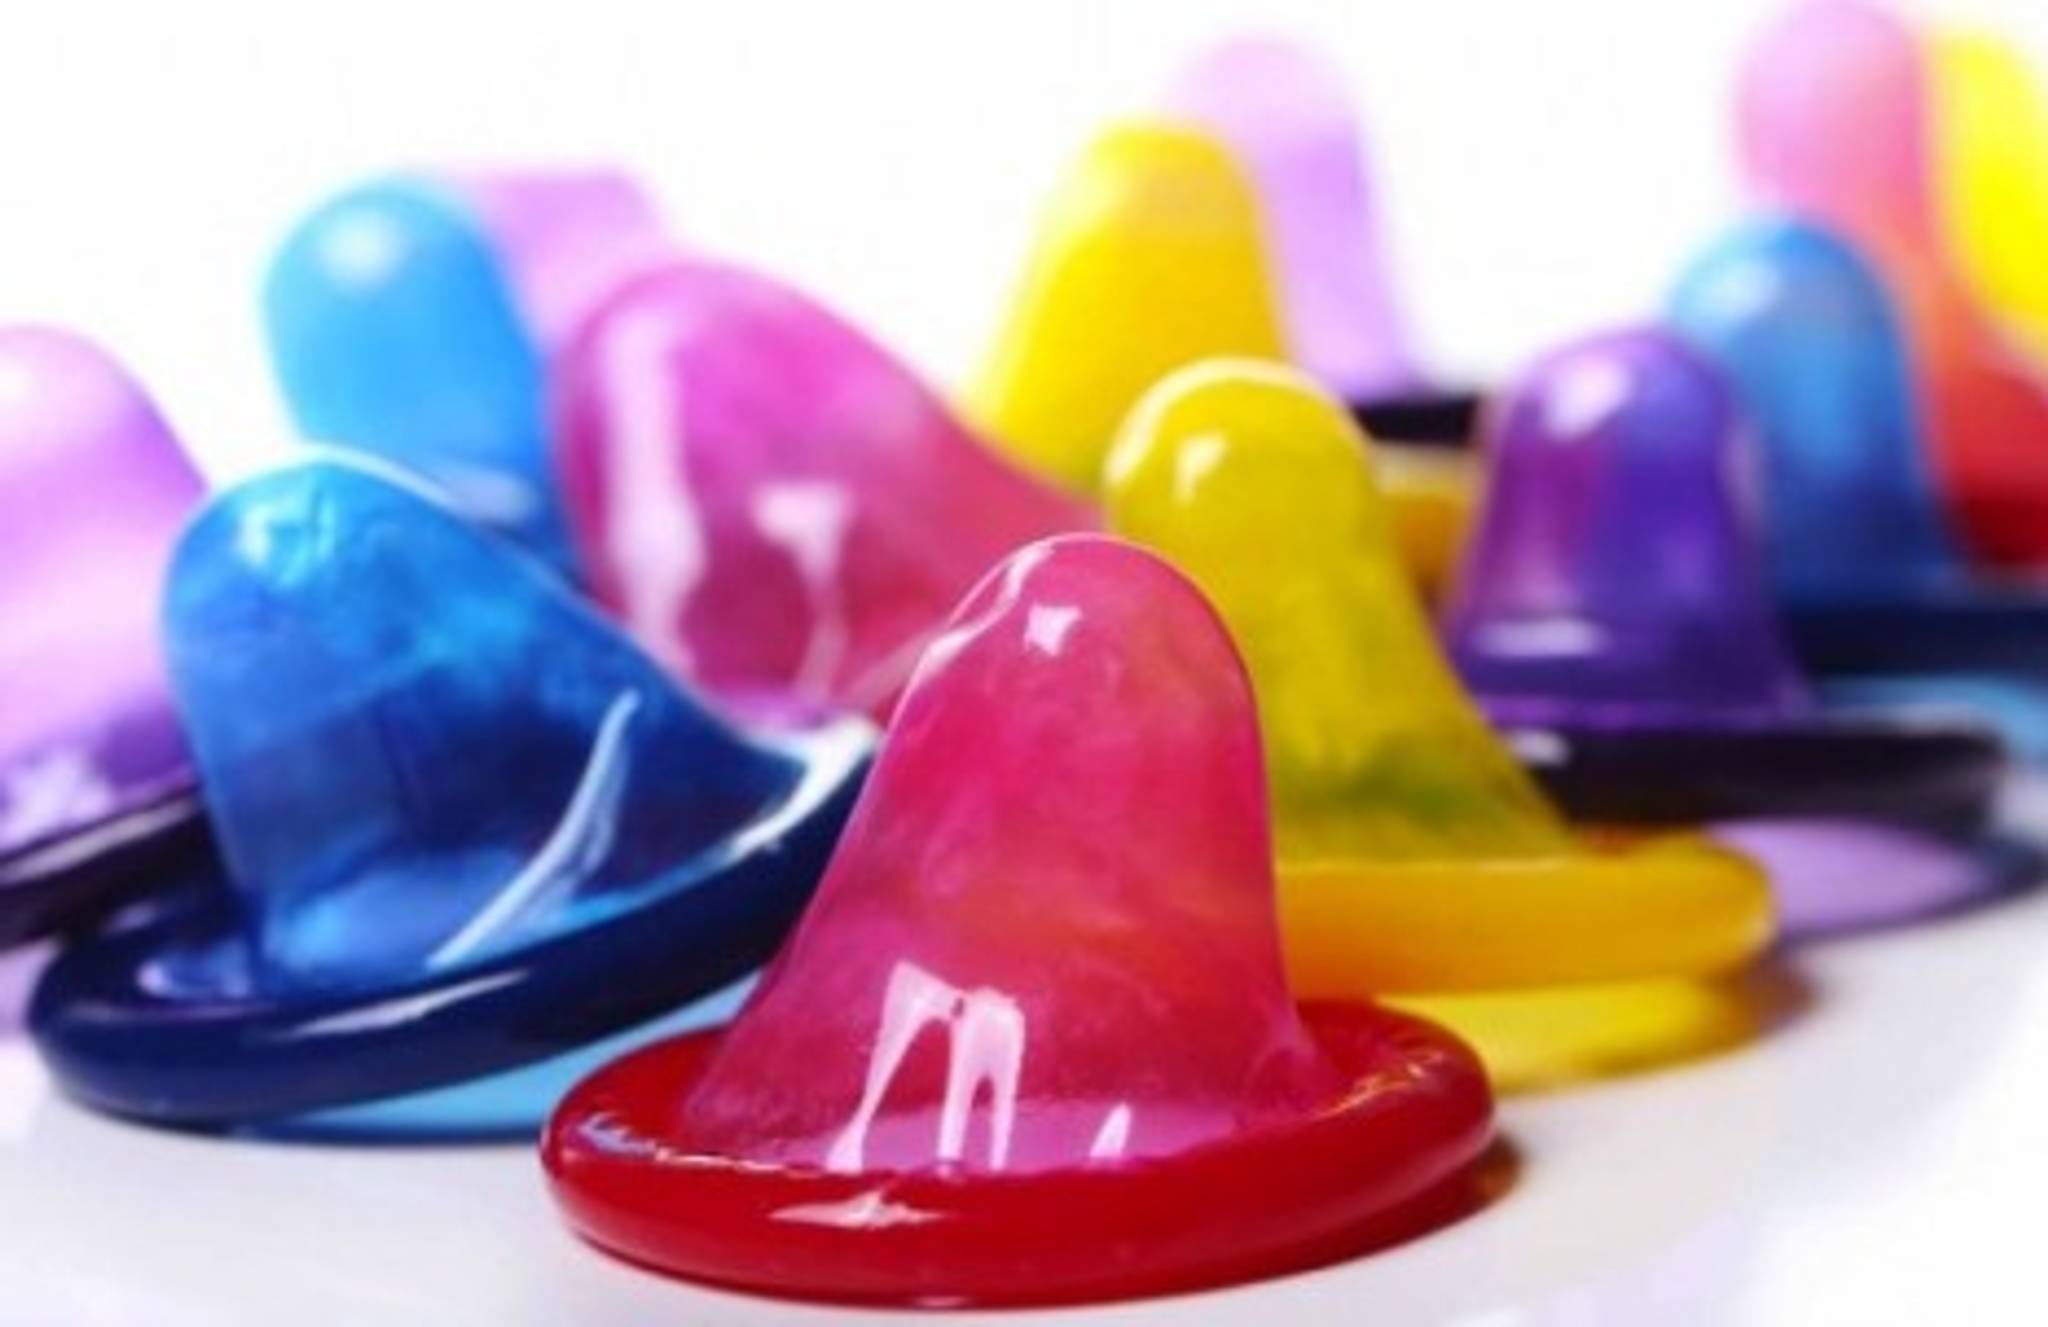 'Supercondoms' for safer sex